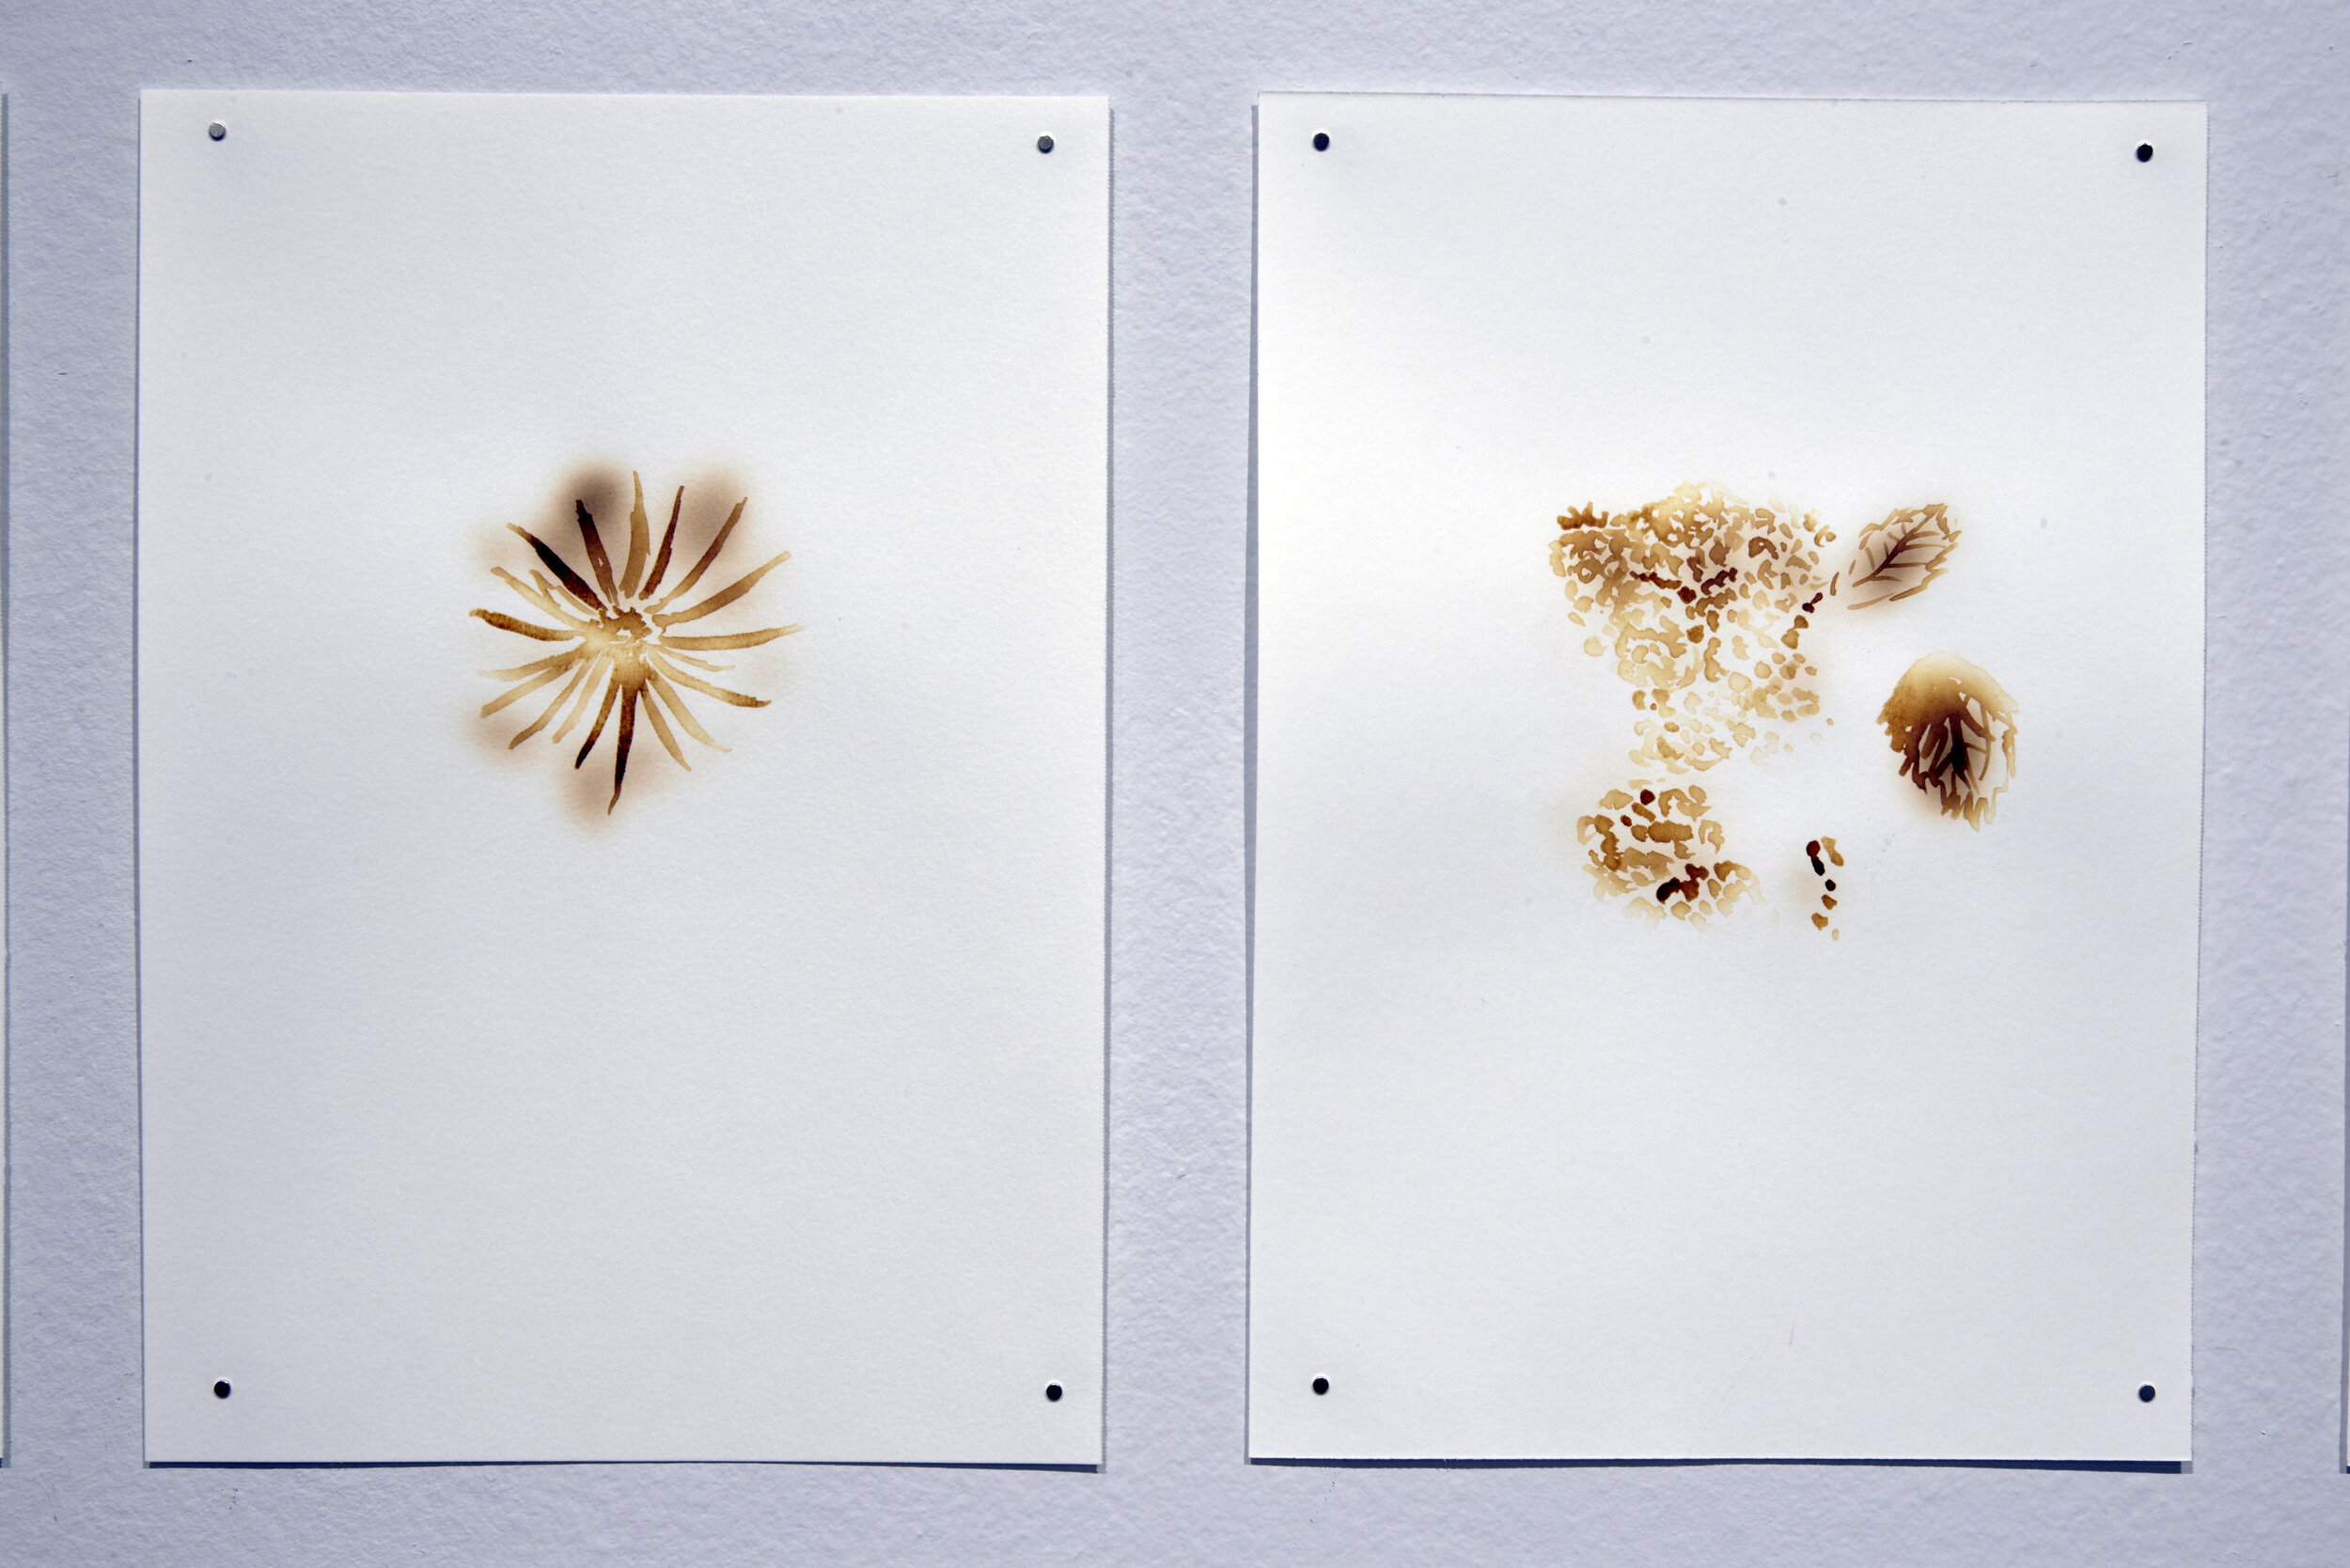  Alana Bartol,  Plants of Grassy Mountain (detail),  2020, original drawings, heated milk on paper. 